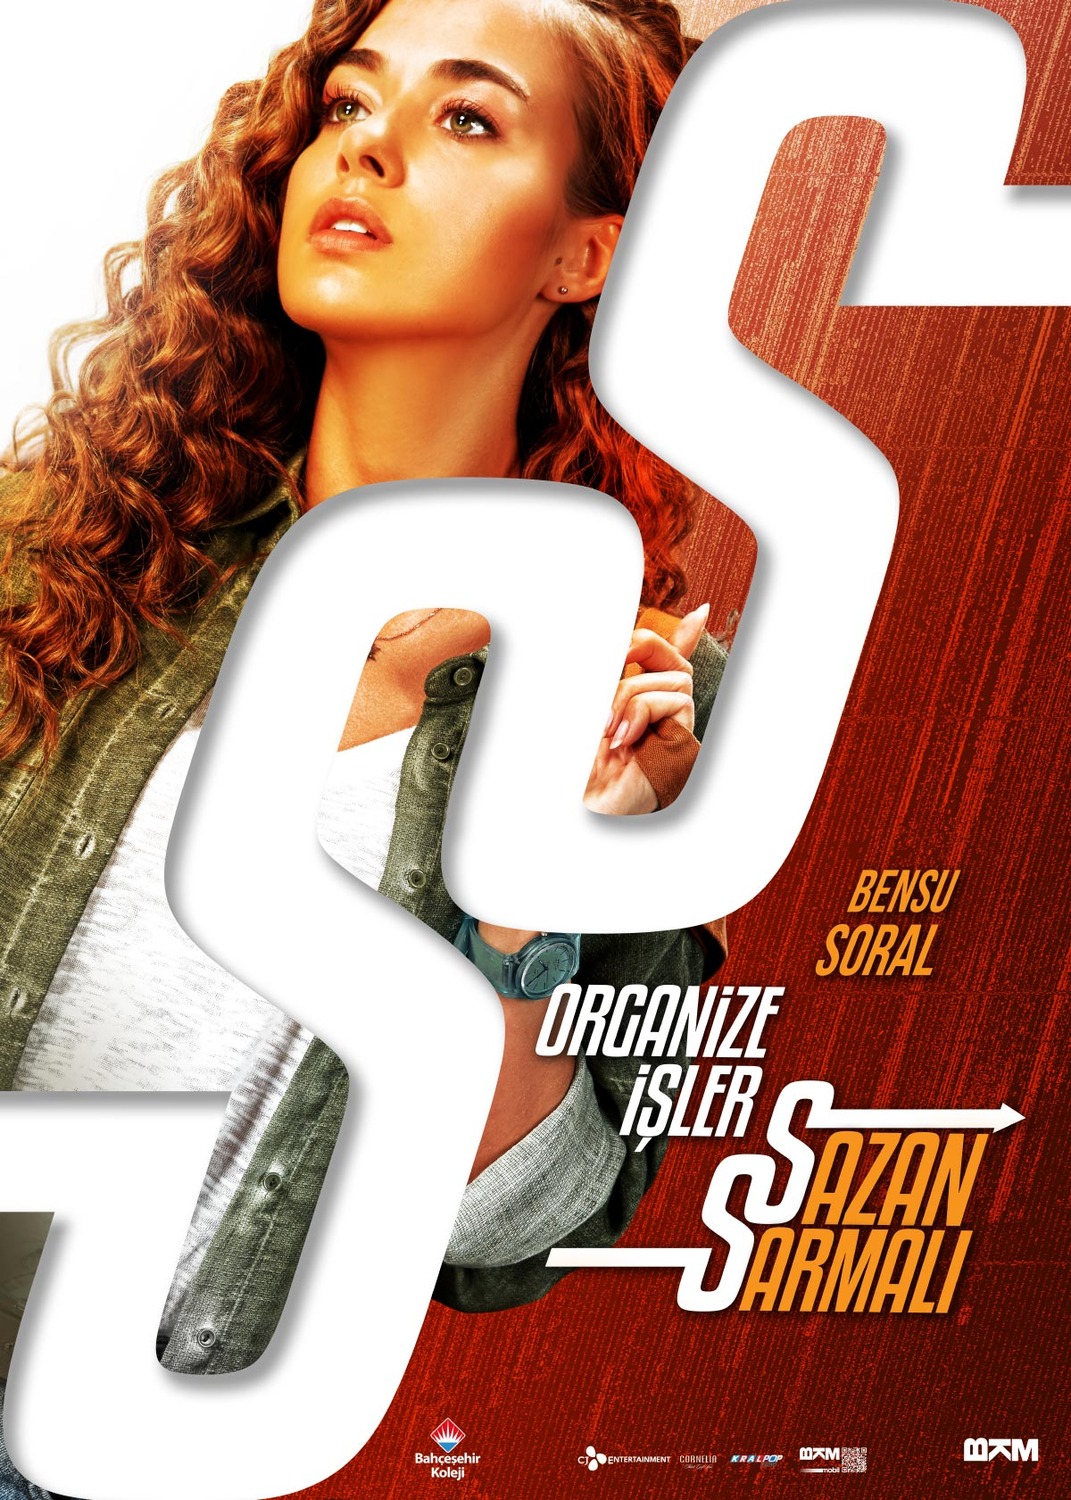 Extra Large Movie Poster Image for Organize Isler: Sazan Sarmali (#5 of 5)